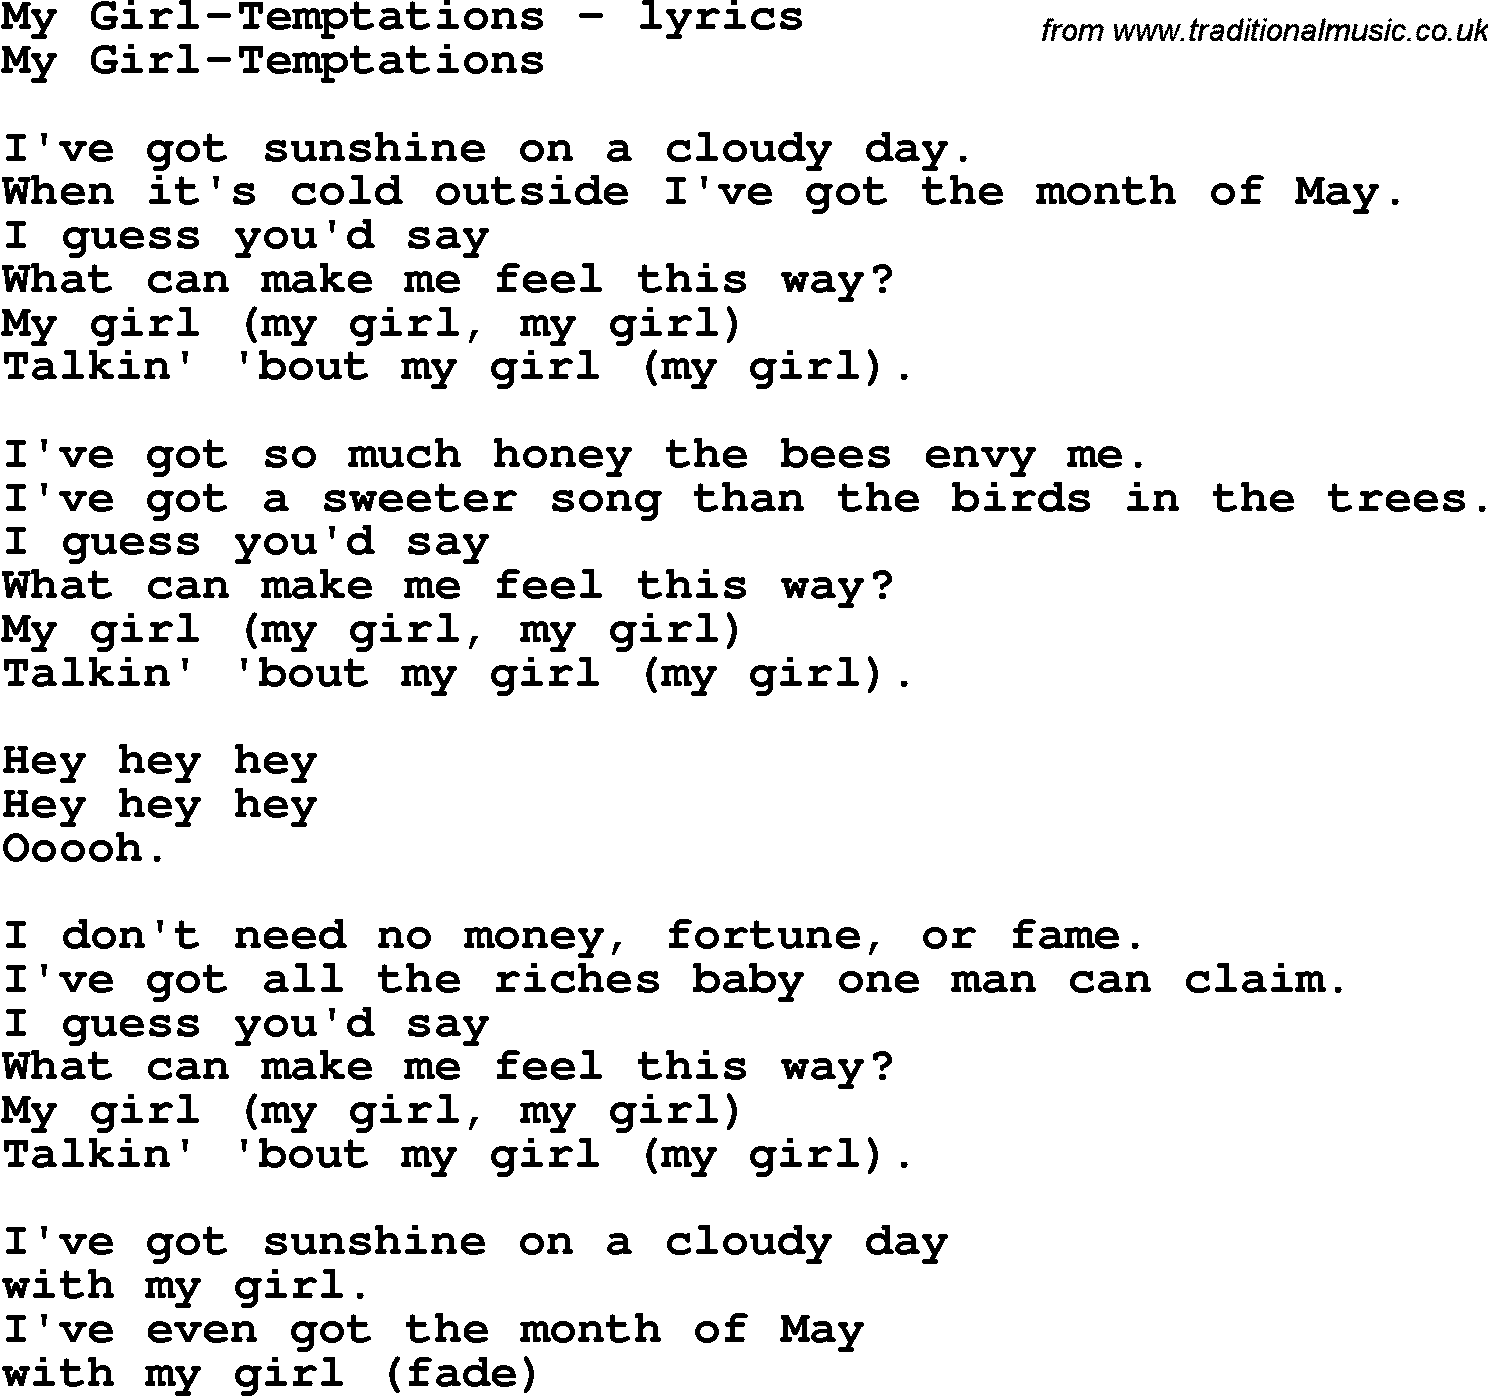 Love Song Lyrics for: My Girl-Temptations